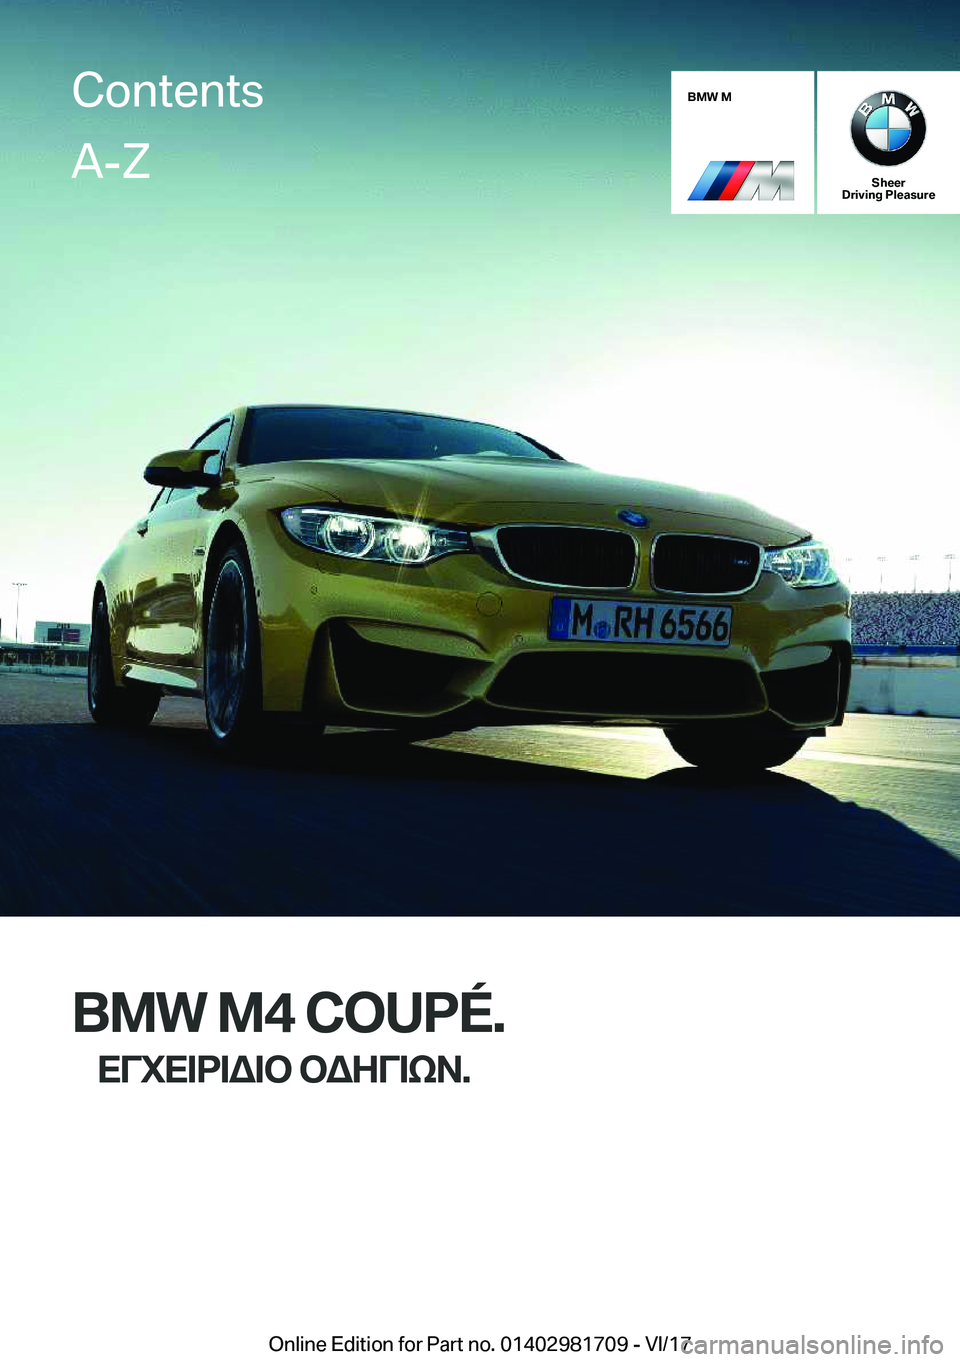 BMW M4 2018  ΟΔΗΓΌΣ ΧΡΉΣΗΣ (in Greek) �B�M�W��M
�S�h�e�e�r
�D�r�i�v�i�n�g��P�l�e�a�s�u�r�e
�B�M�W��M�4��C�O�U�P�